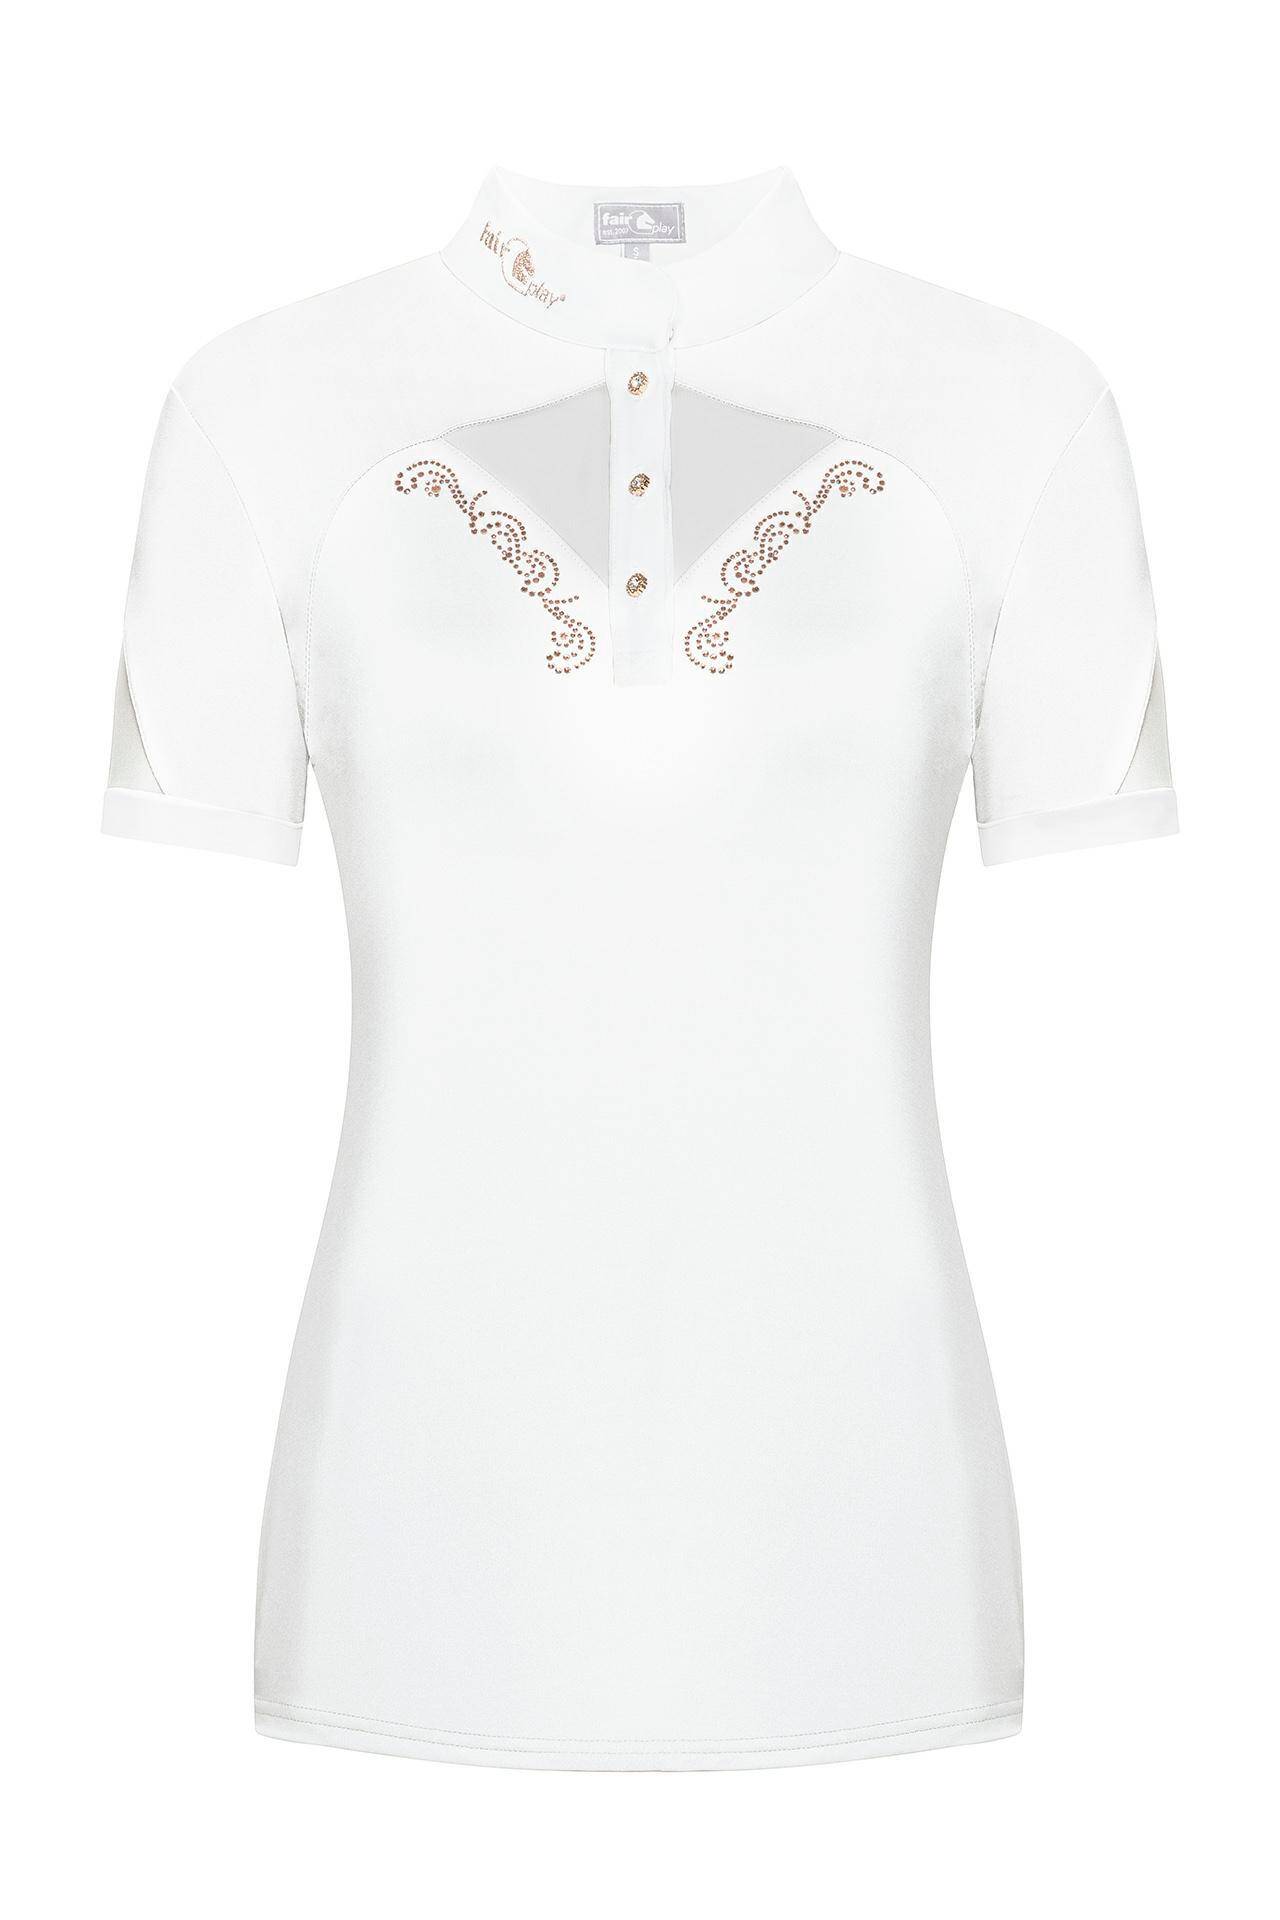 Koszulka FP CATHRINE ROSEGOLD biały 36